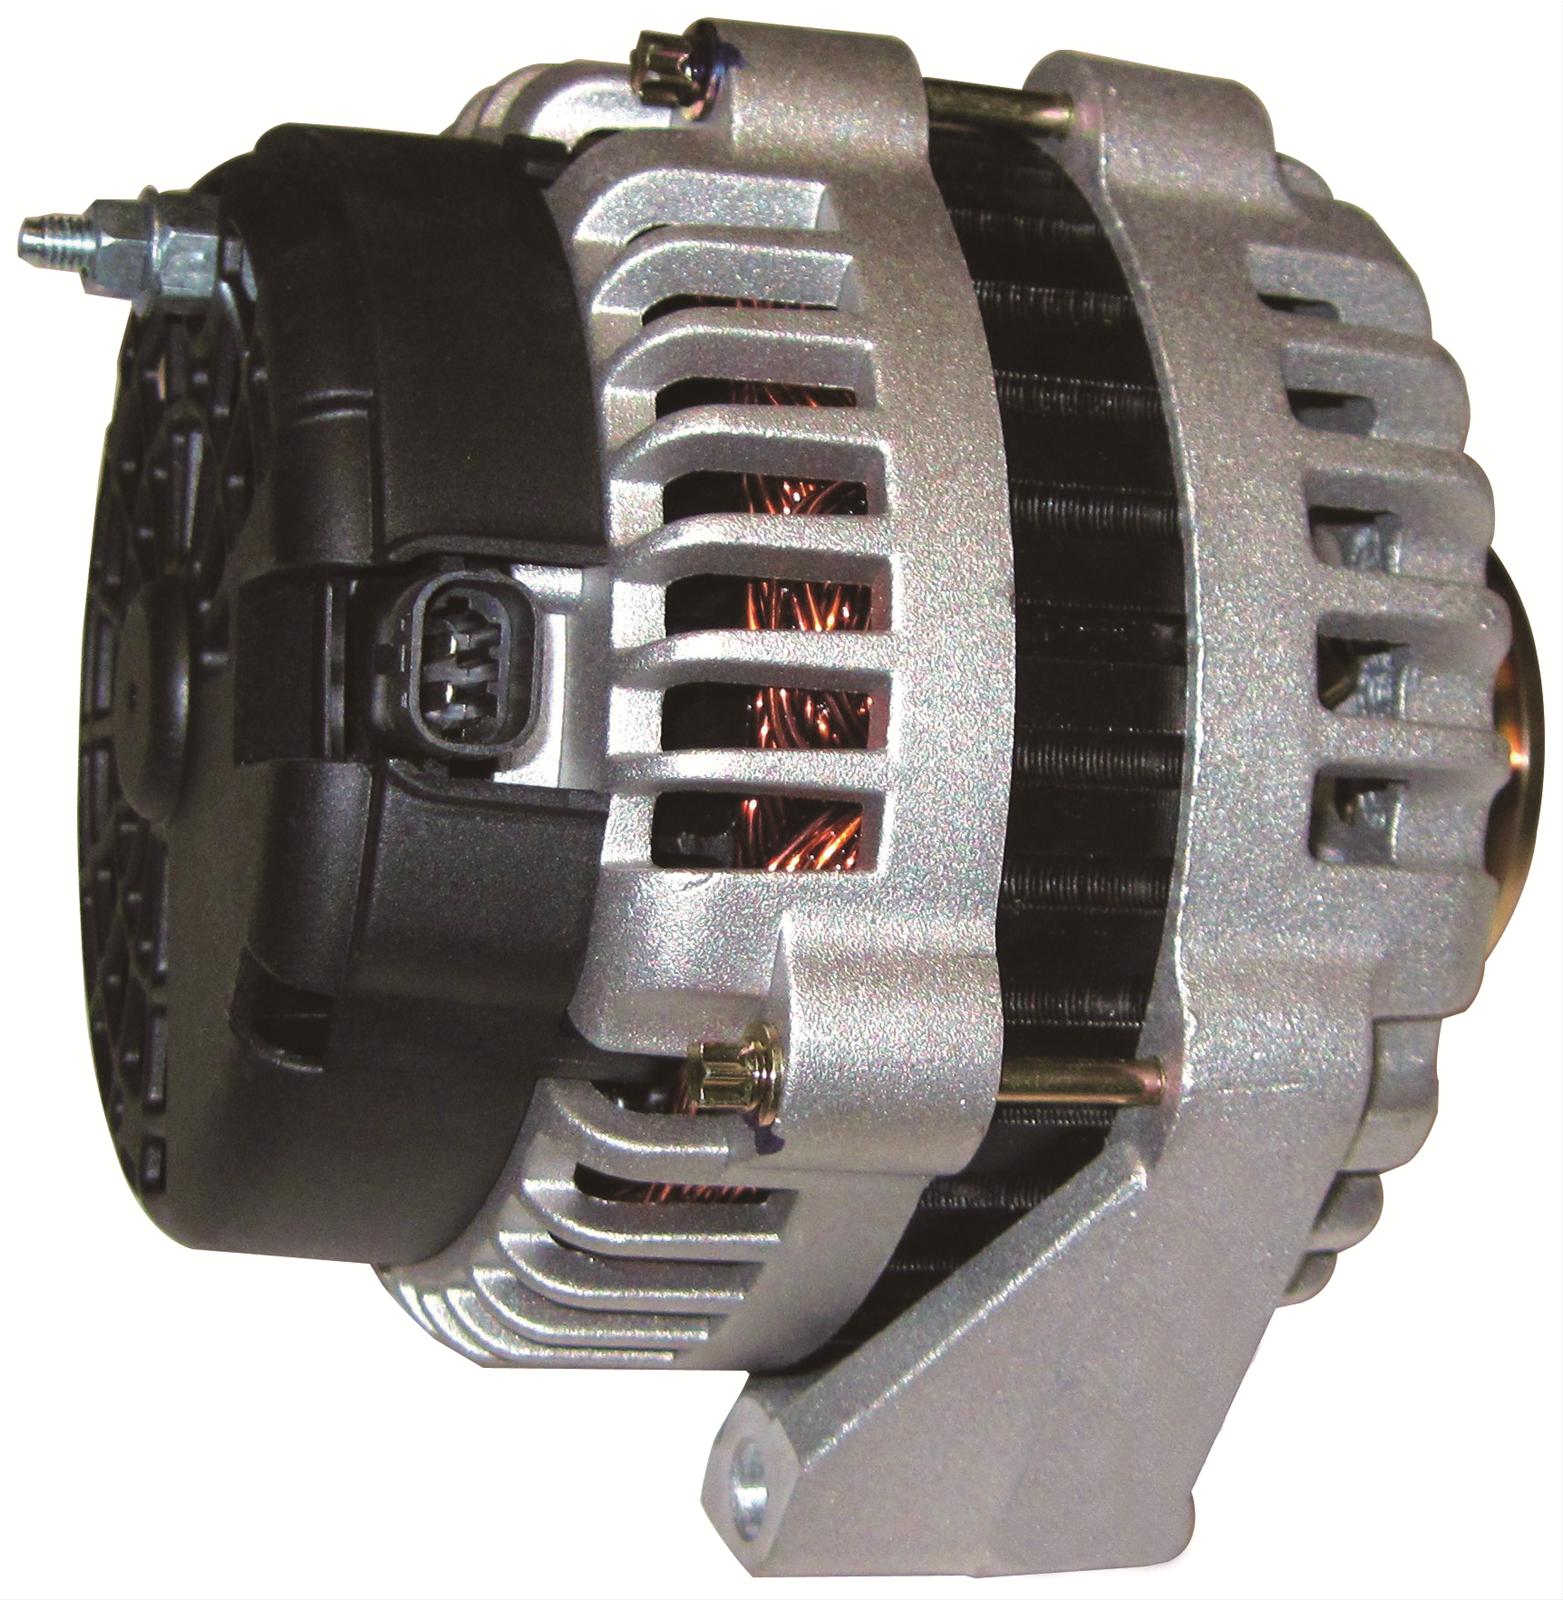 2006 Chevy Silverado alternator. Wai World Power Systems. Генератор, Wai, 1 шт, 12112n.